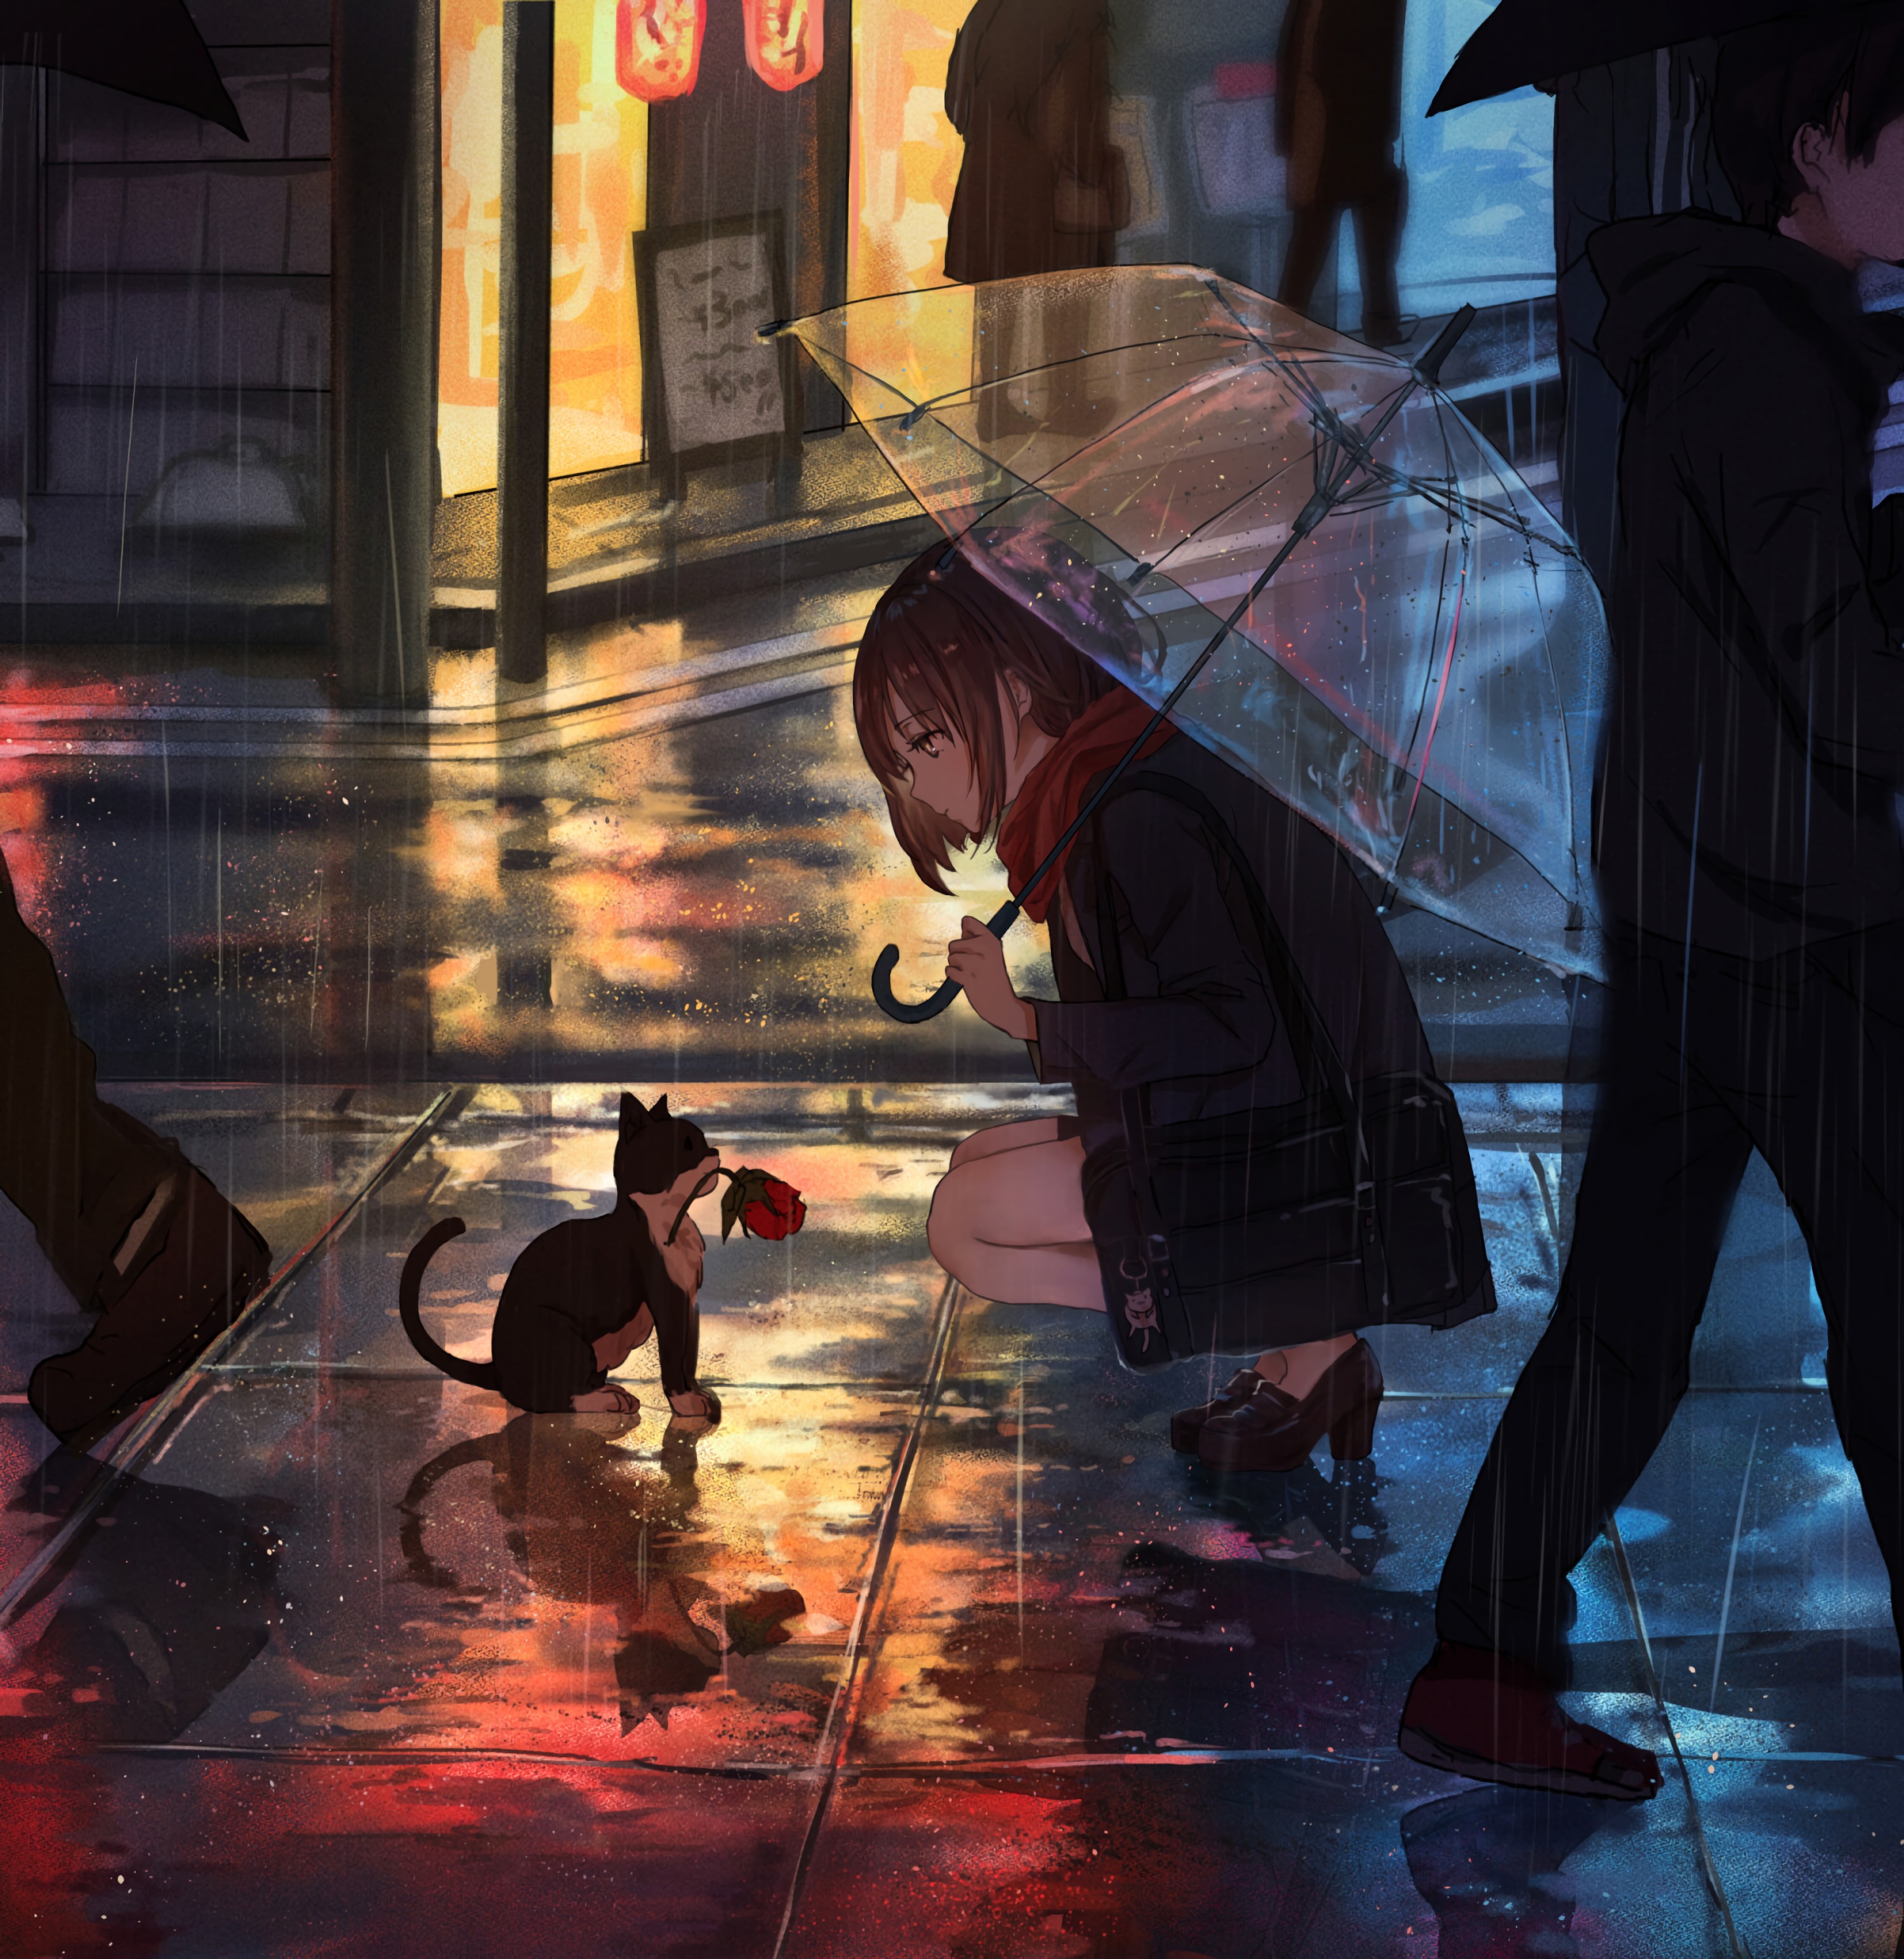 Anime Anime Girls Cats Umbrella Scarf Rose Short Hair Bag Rain Street Artwork Catzz 3000x3086